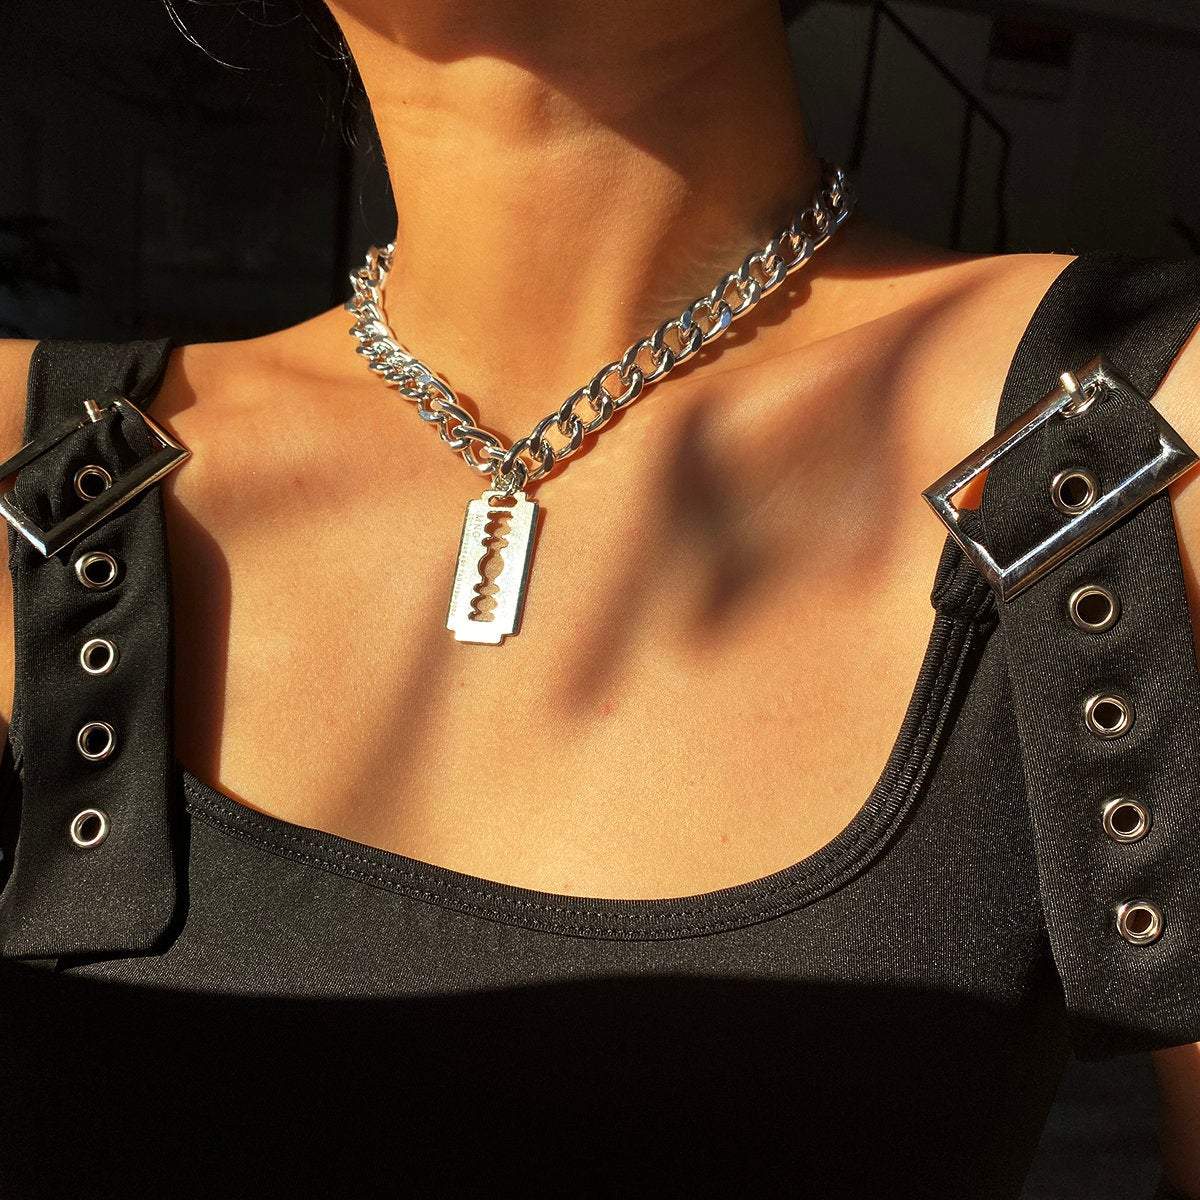 Razor Blade Chain Necklace